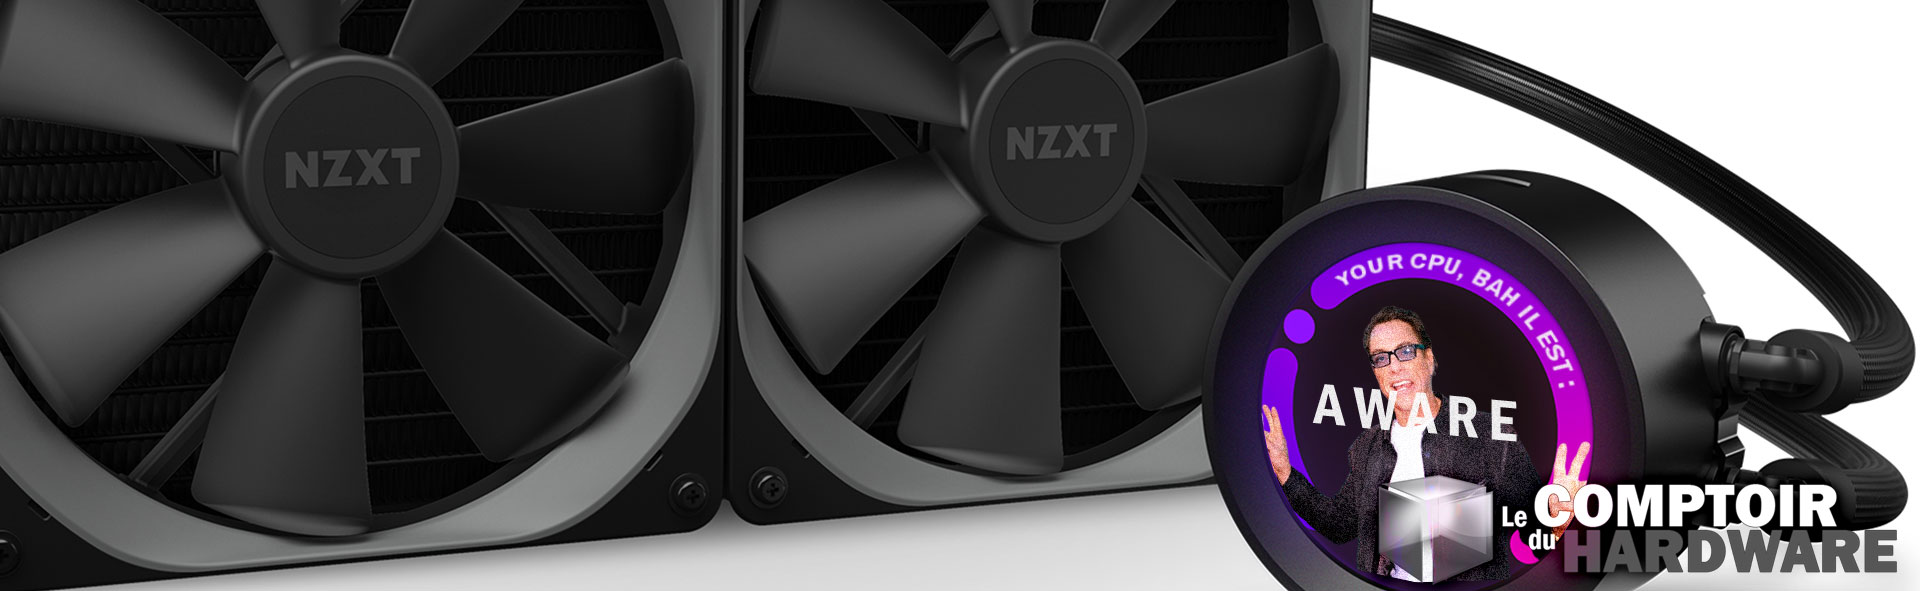 Test • NZXT Kraken X53 / Z63 / Z73 - Le comptoir du hardware